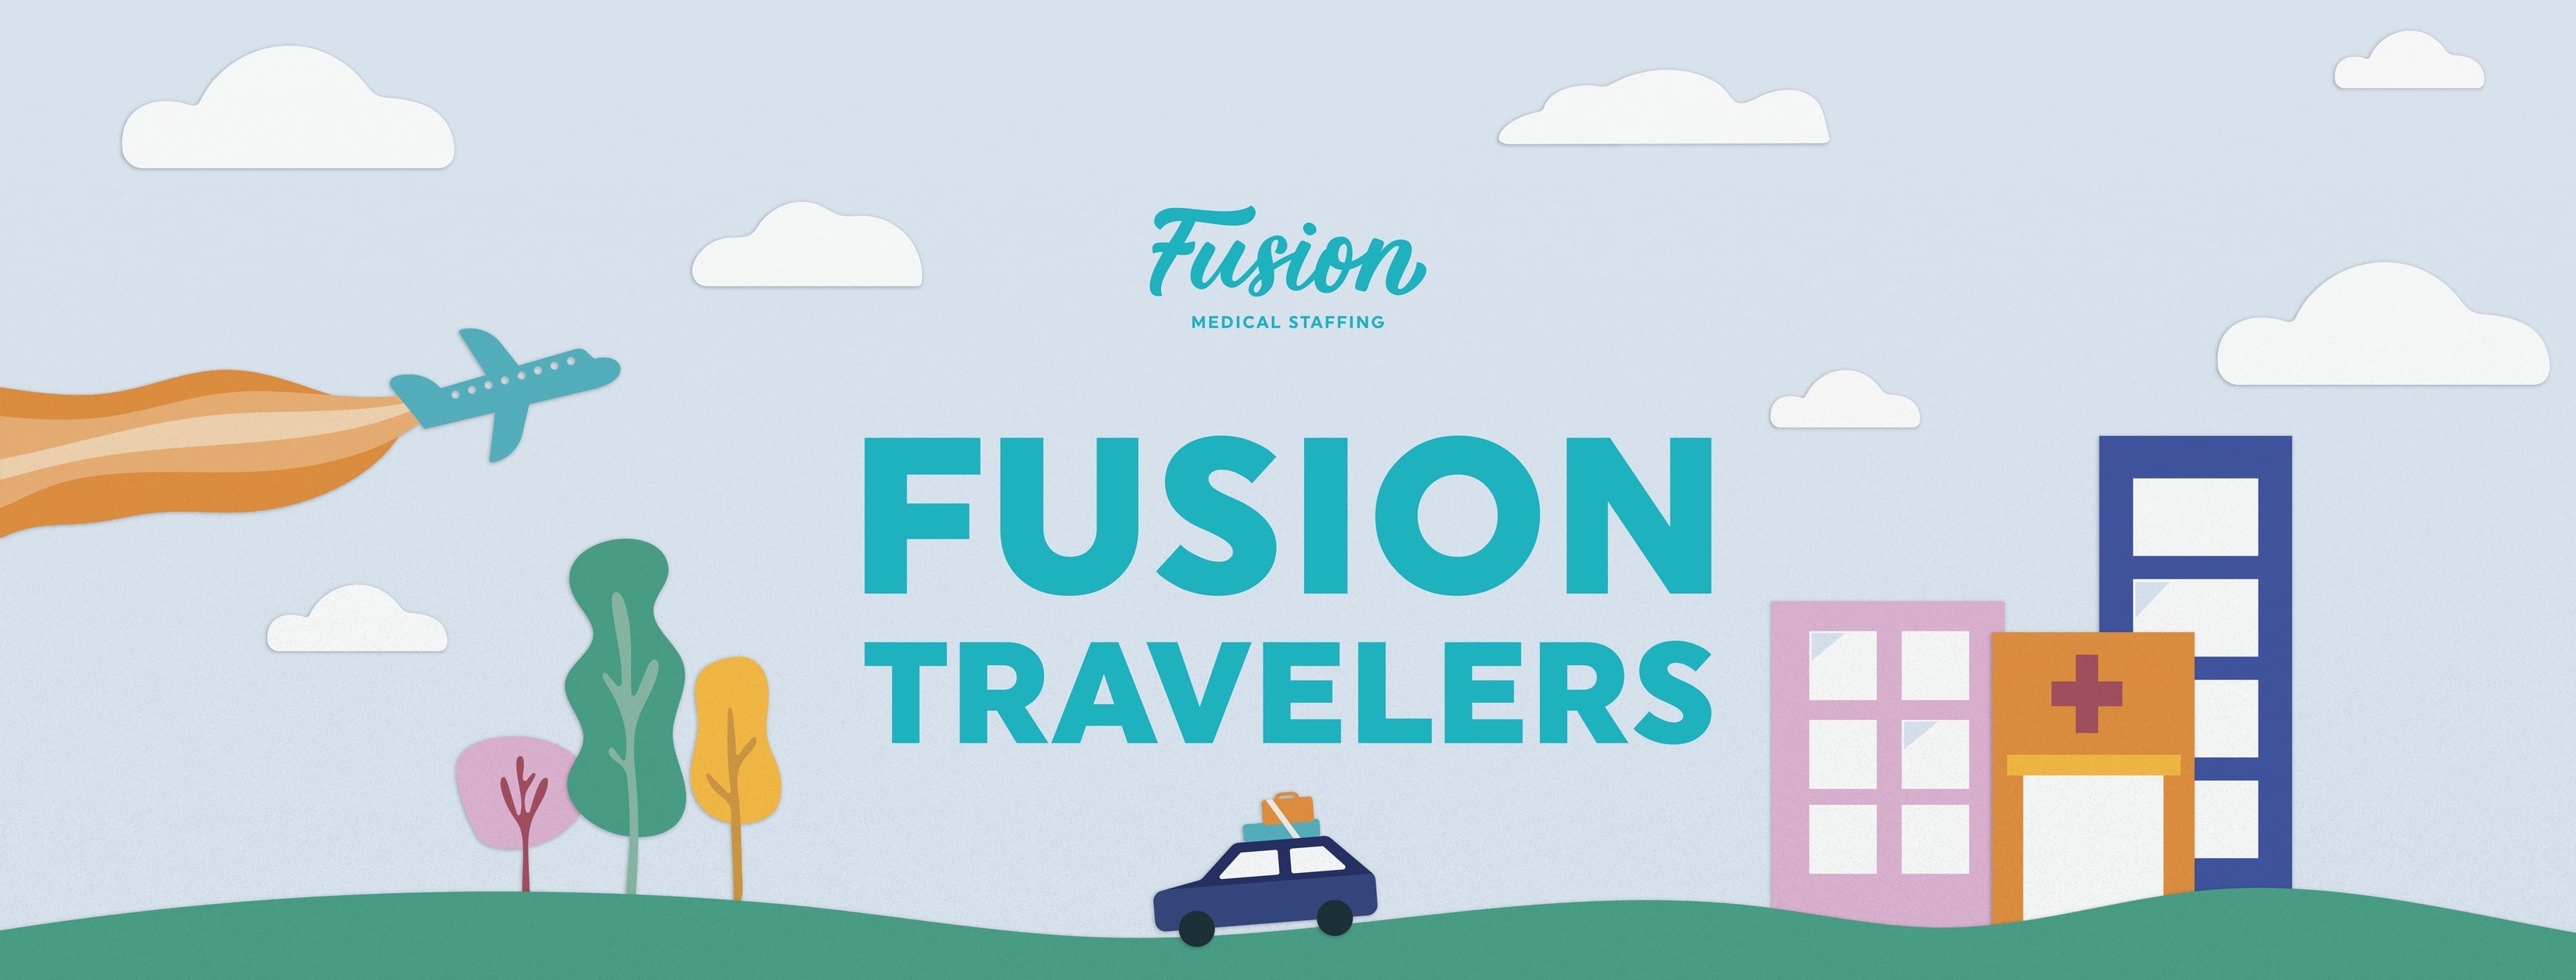 Fusion travelers-min